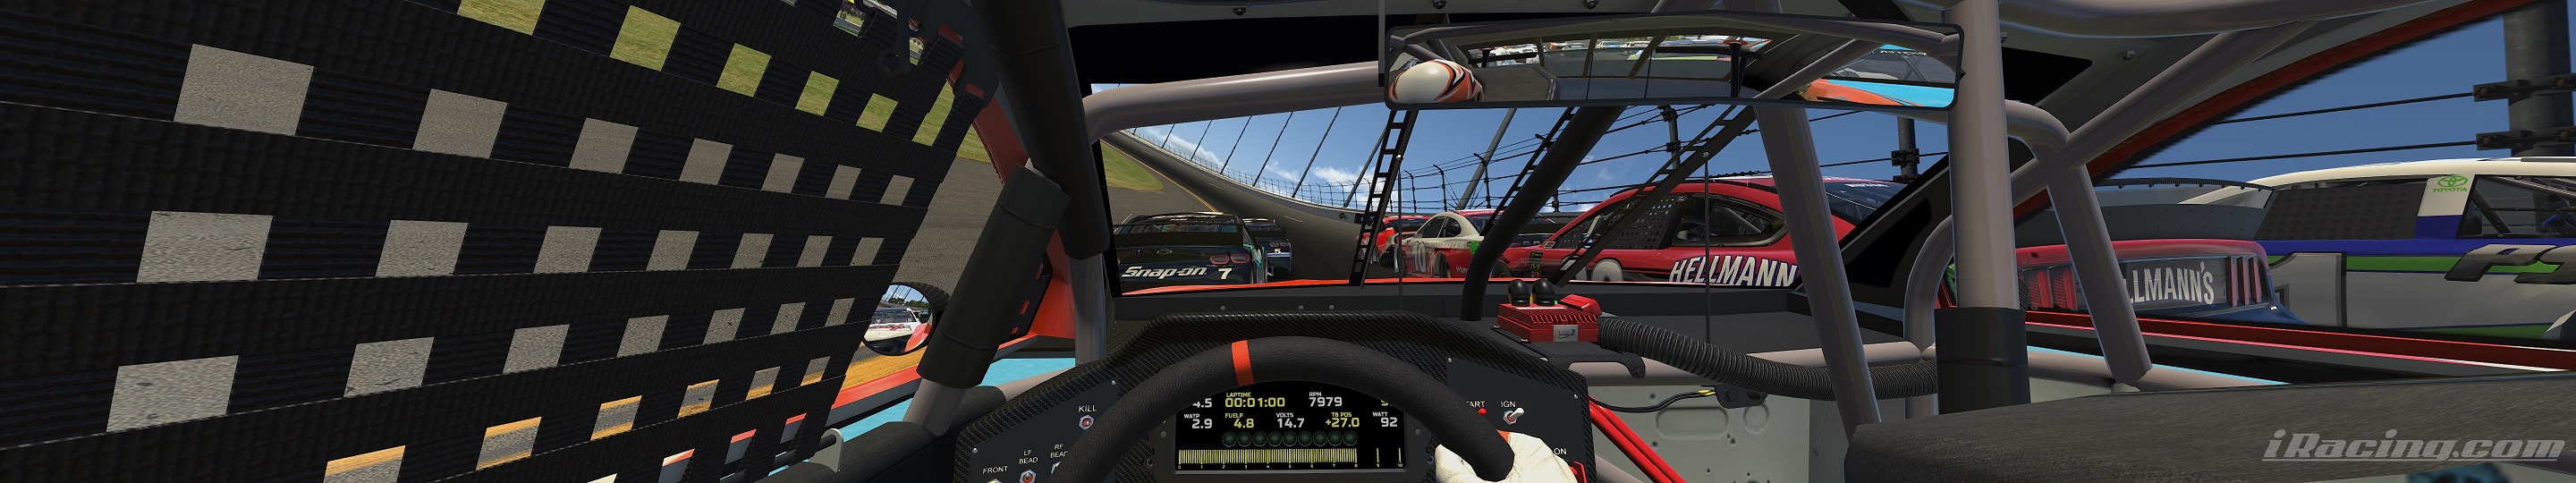 3 iRACING DAYTONA NASCAR cockpit copy.jpg